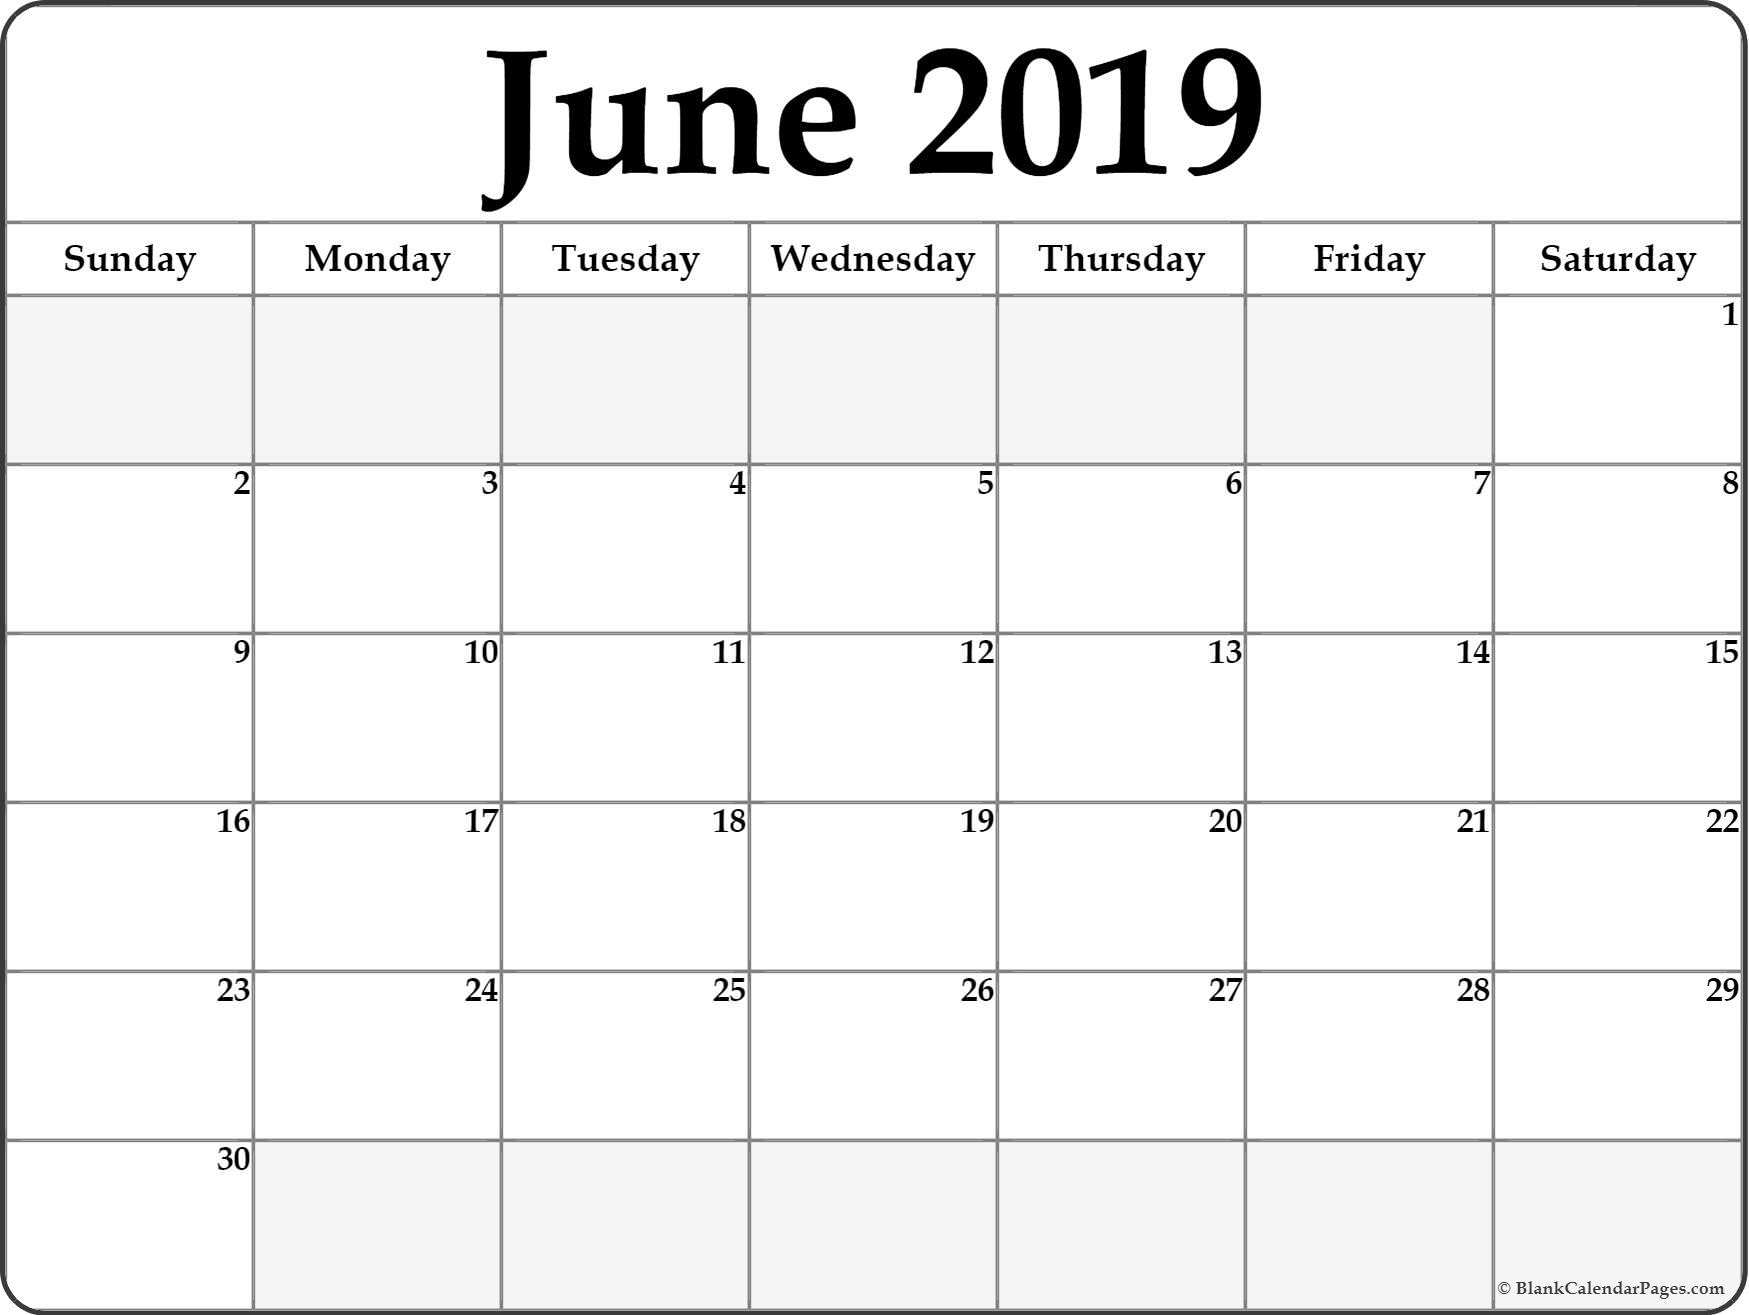 June 2019 Calendar | Free Printable Monthly Calendars A Blank Calendar Page